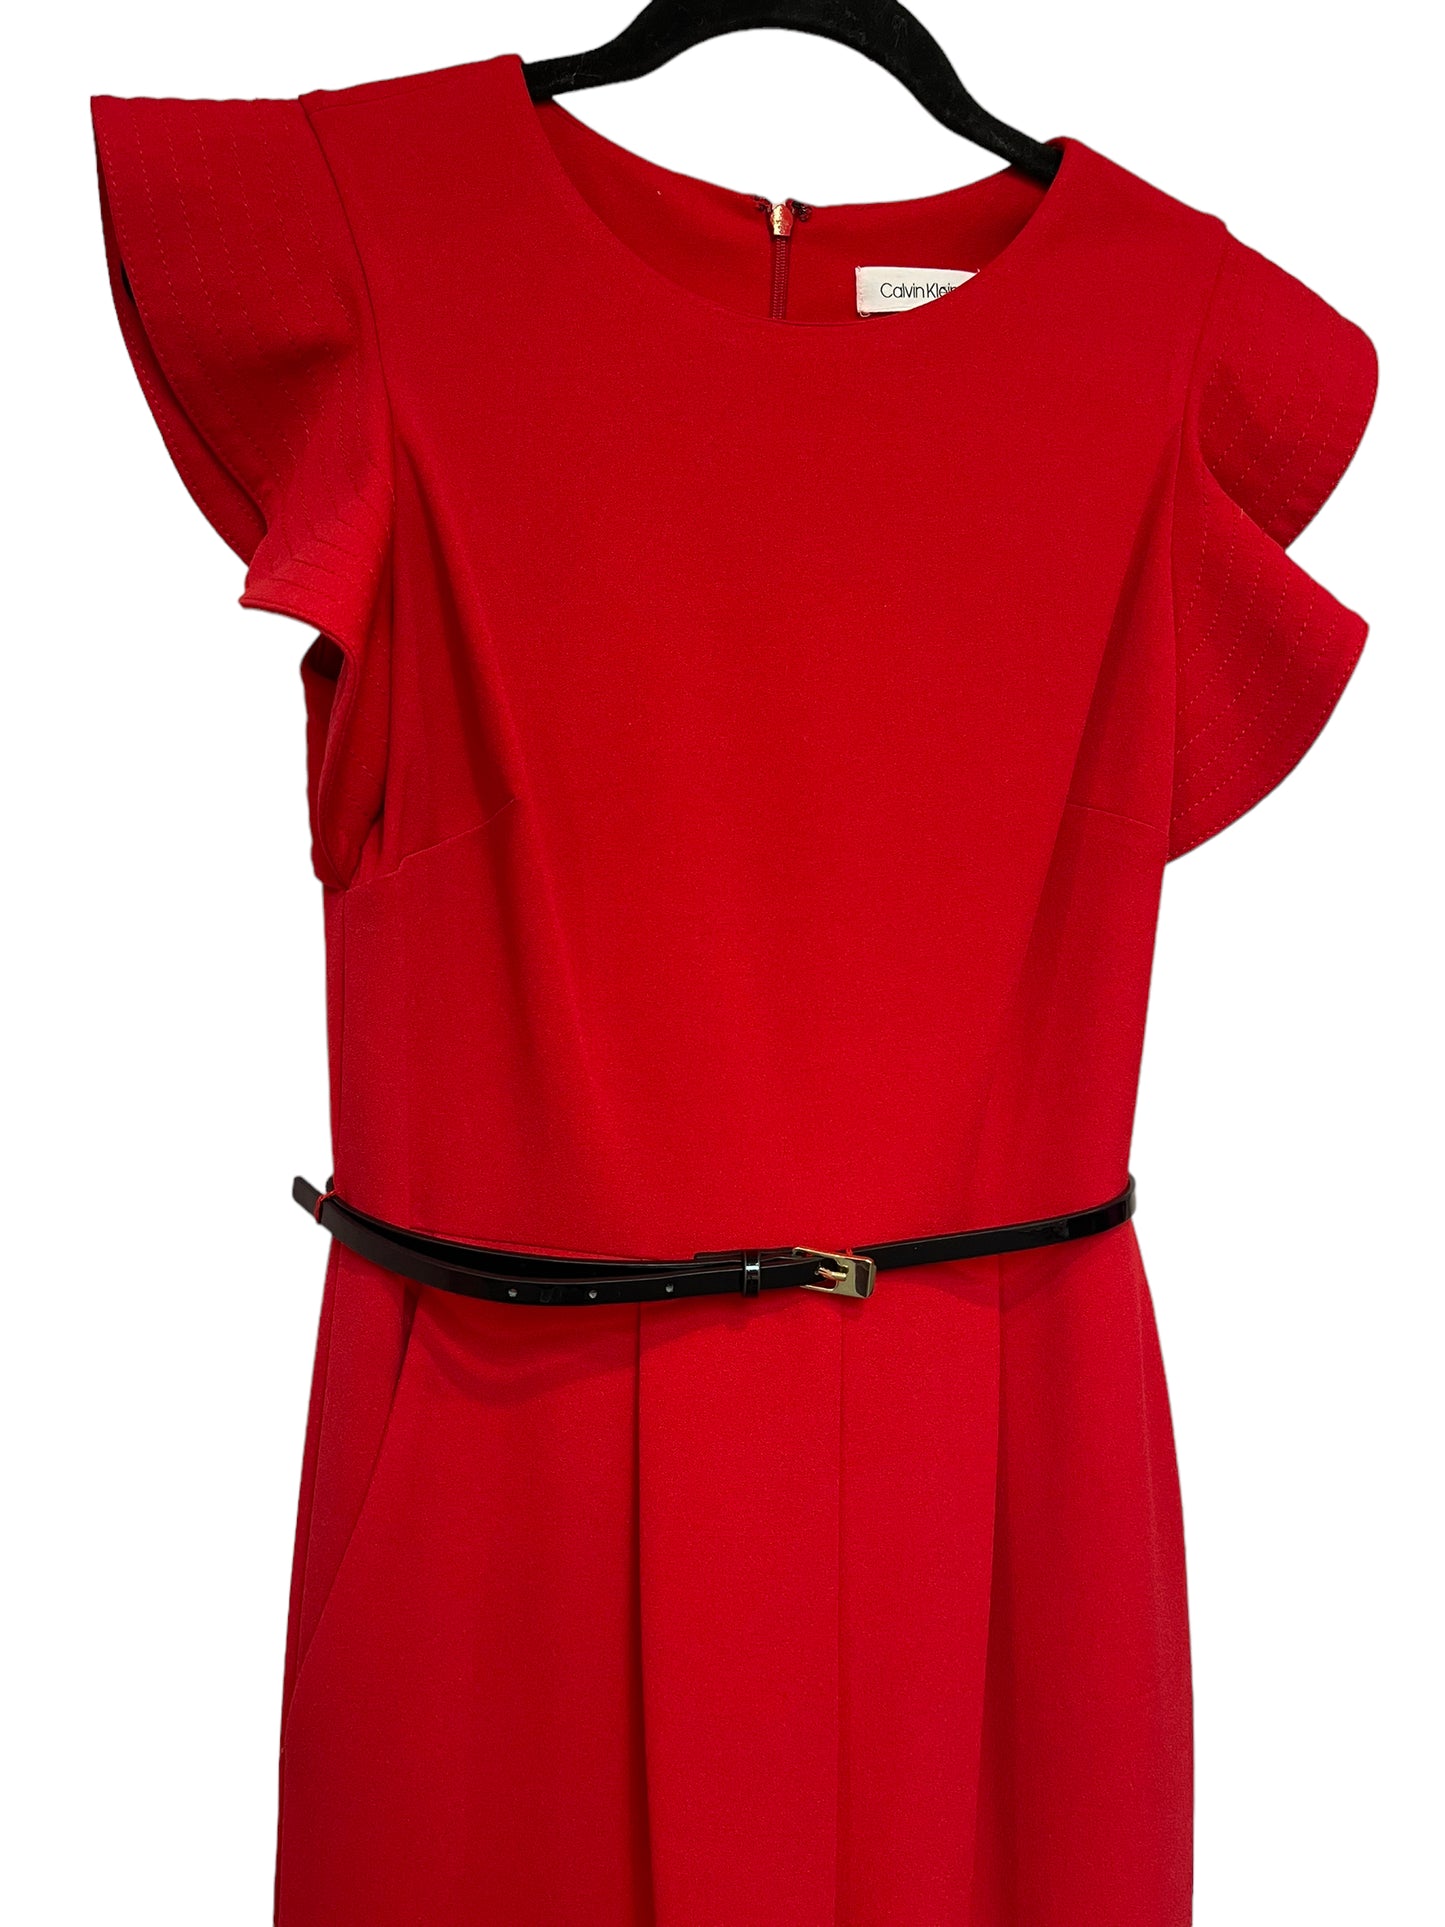 Calvin Klein Red Jumpsuit With Black Belt Size 4